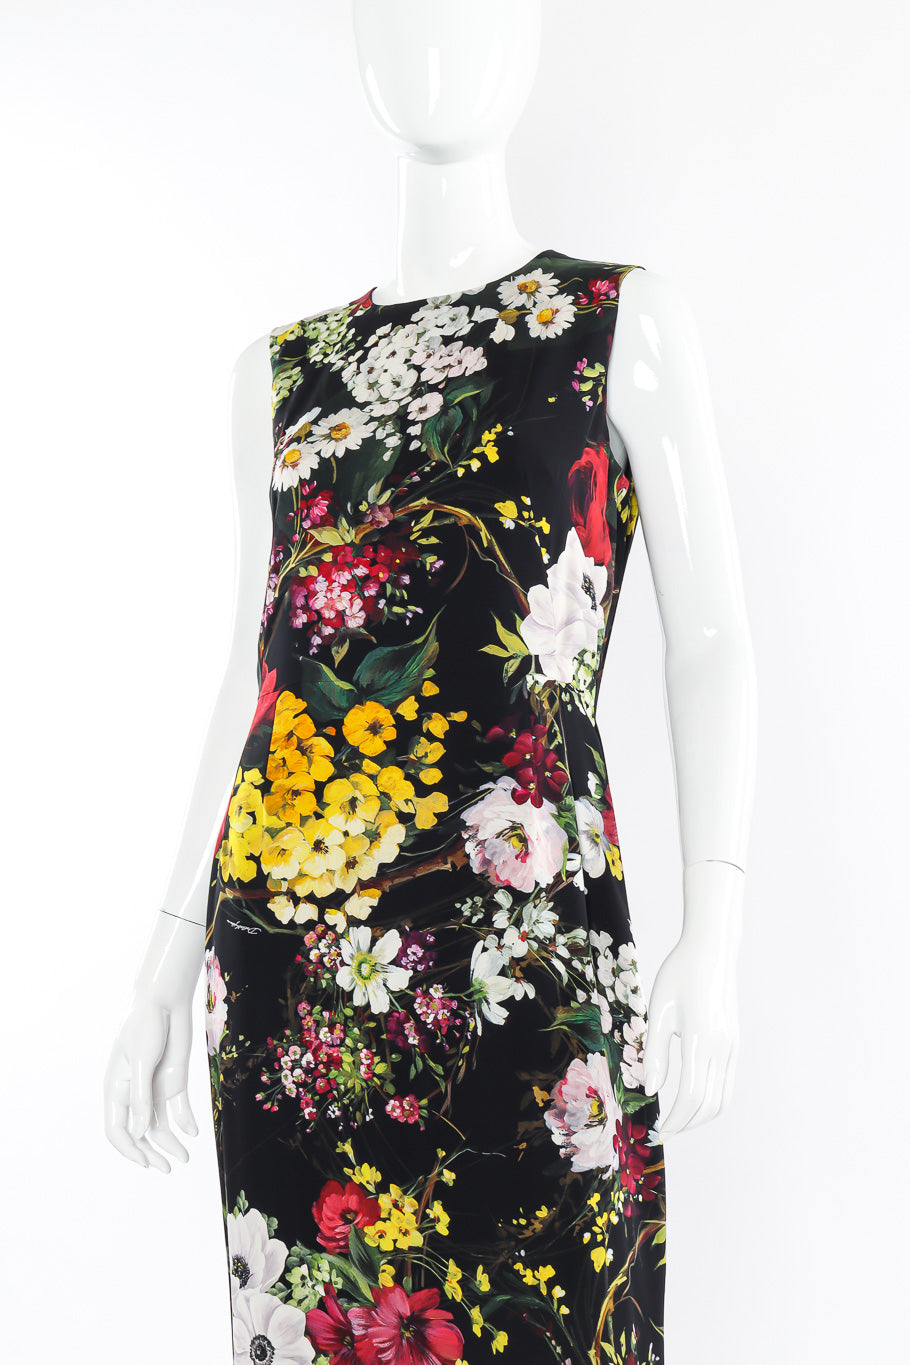 Dolce & Gabbana floral printed sheath dress on mannequin @recessla